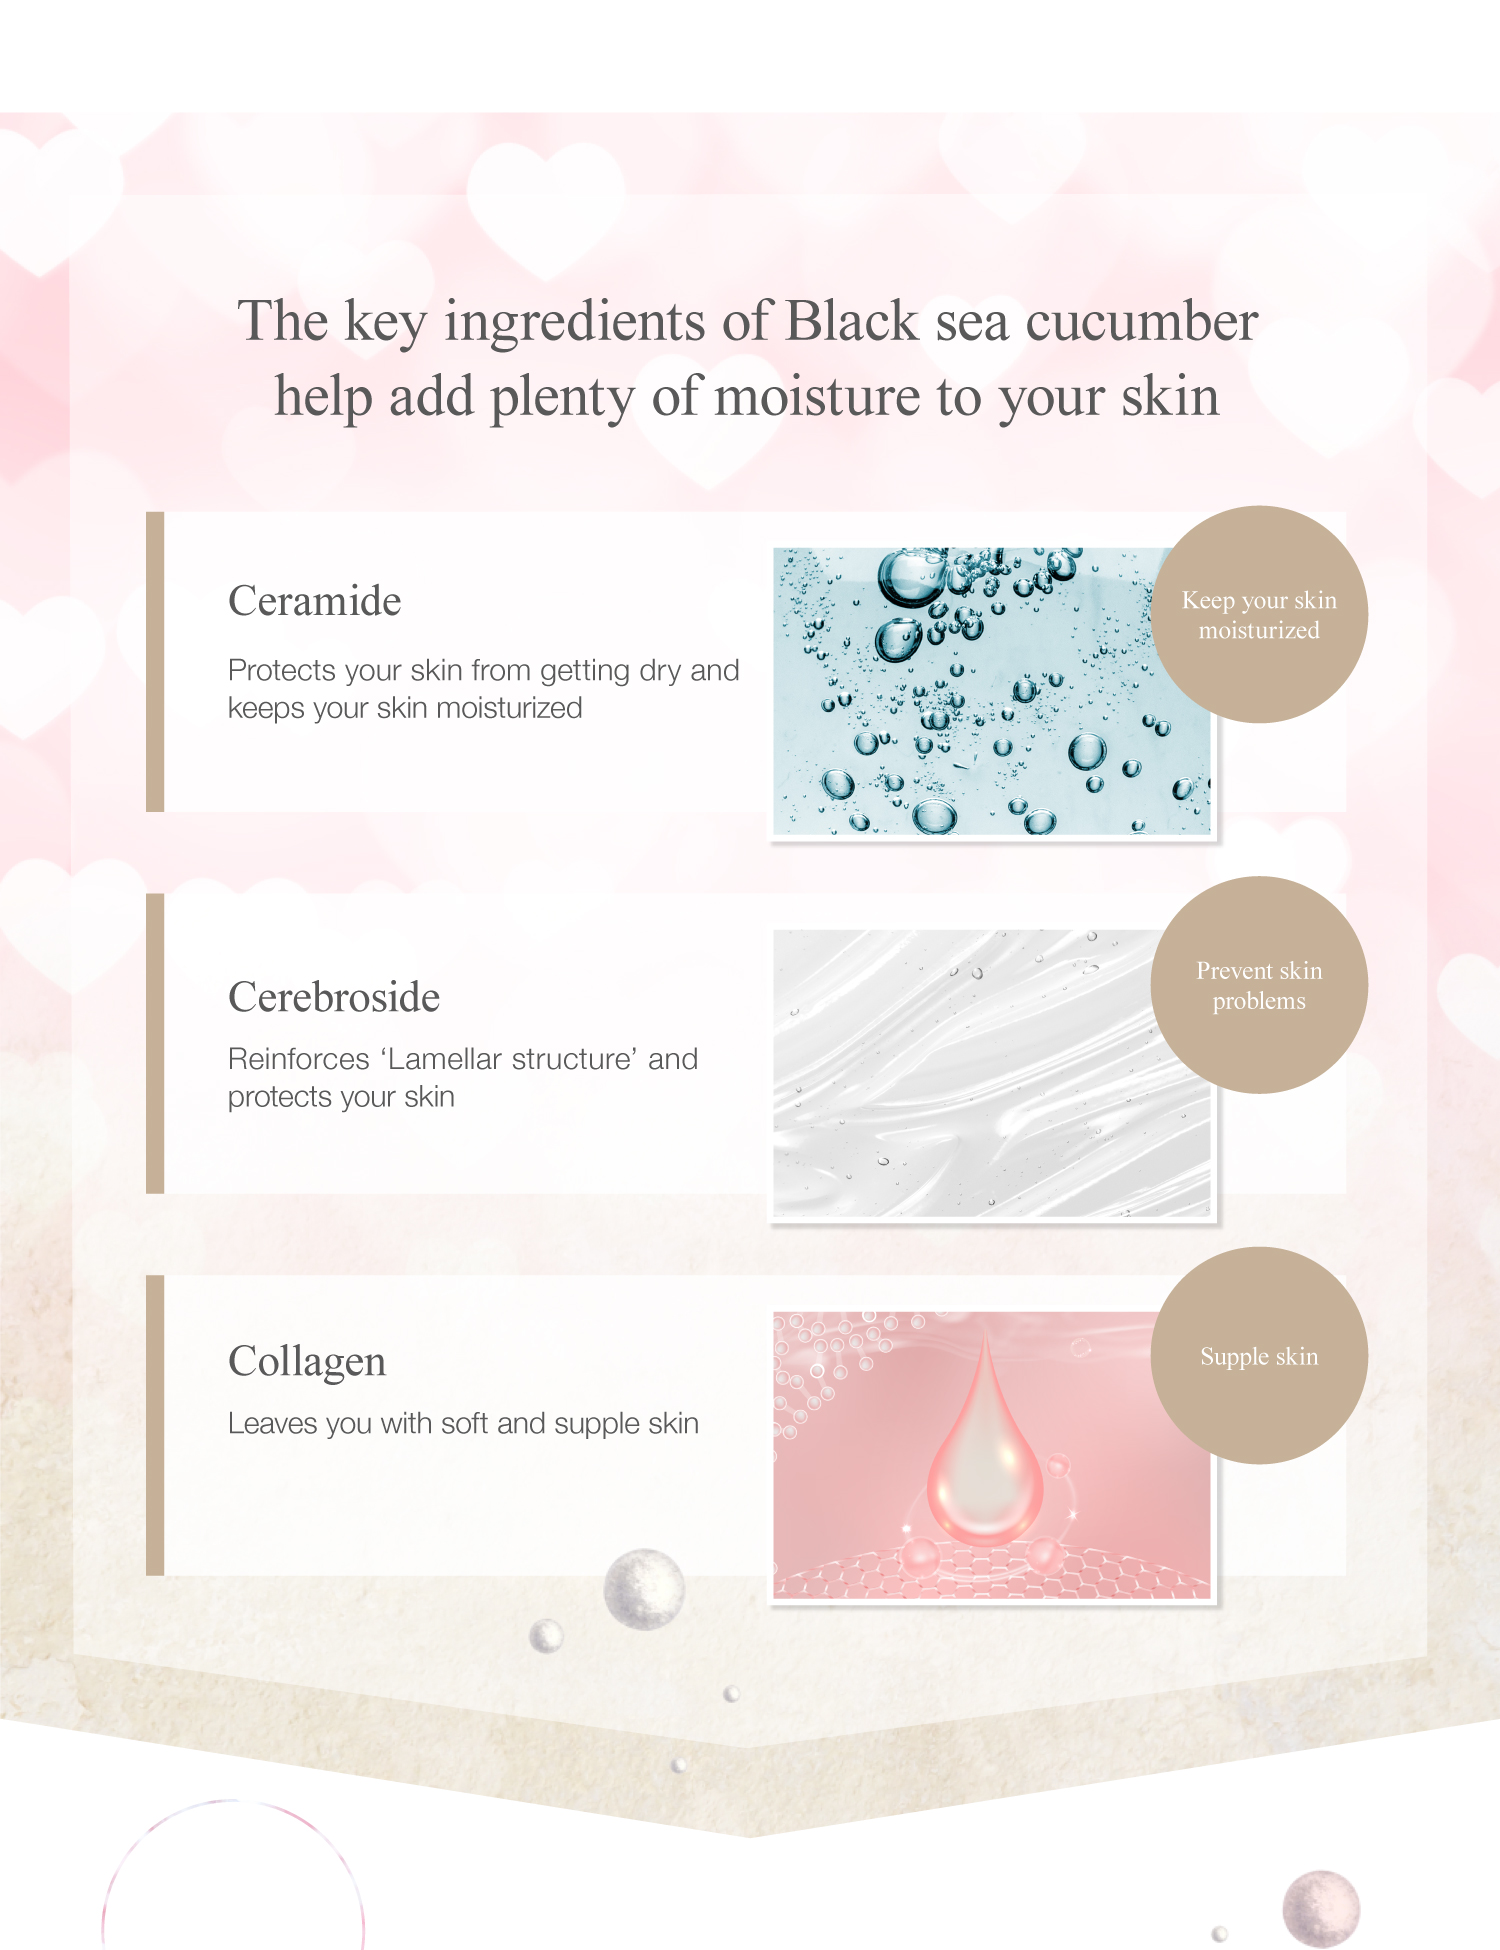 The key ingredients of Black sea cucumber help add plenty of moisture to your skin